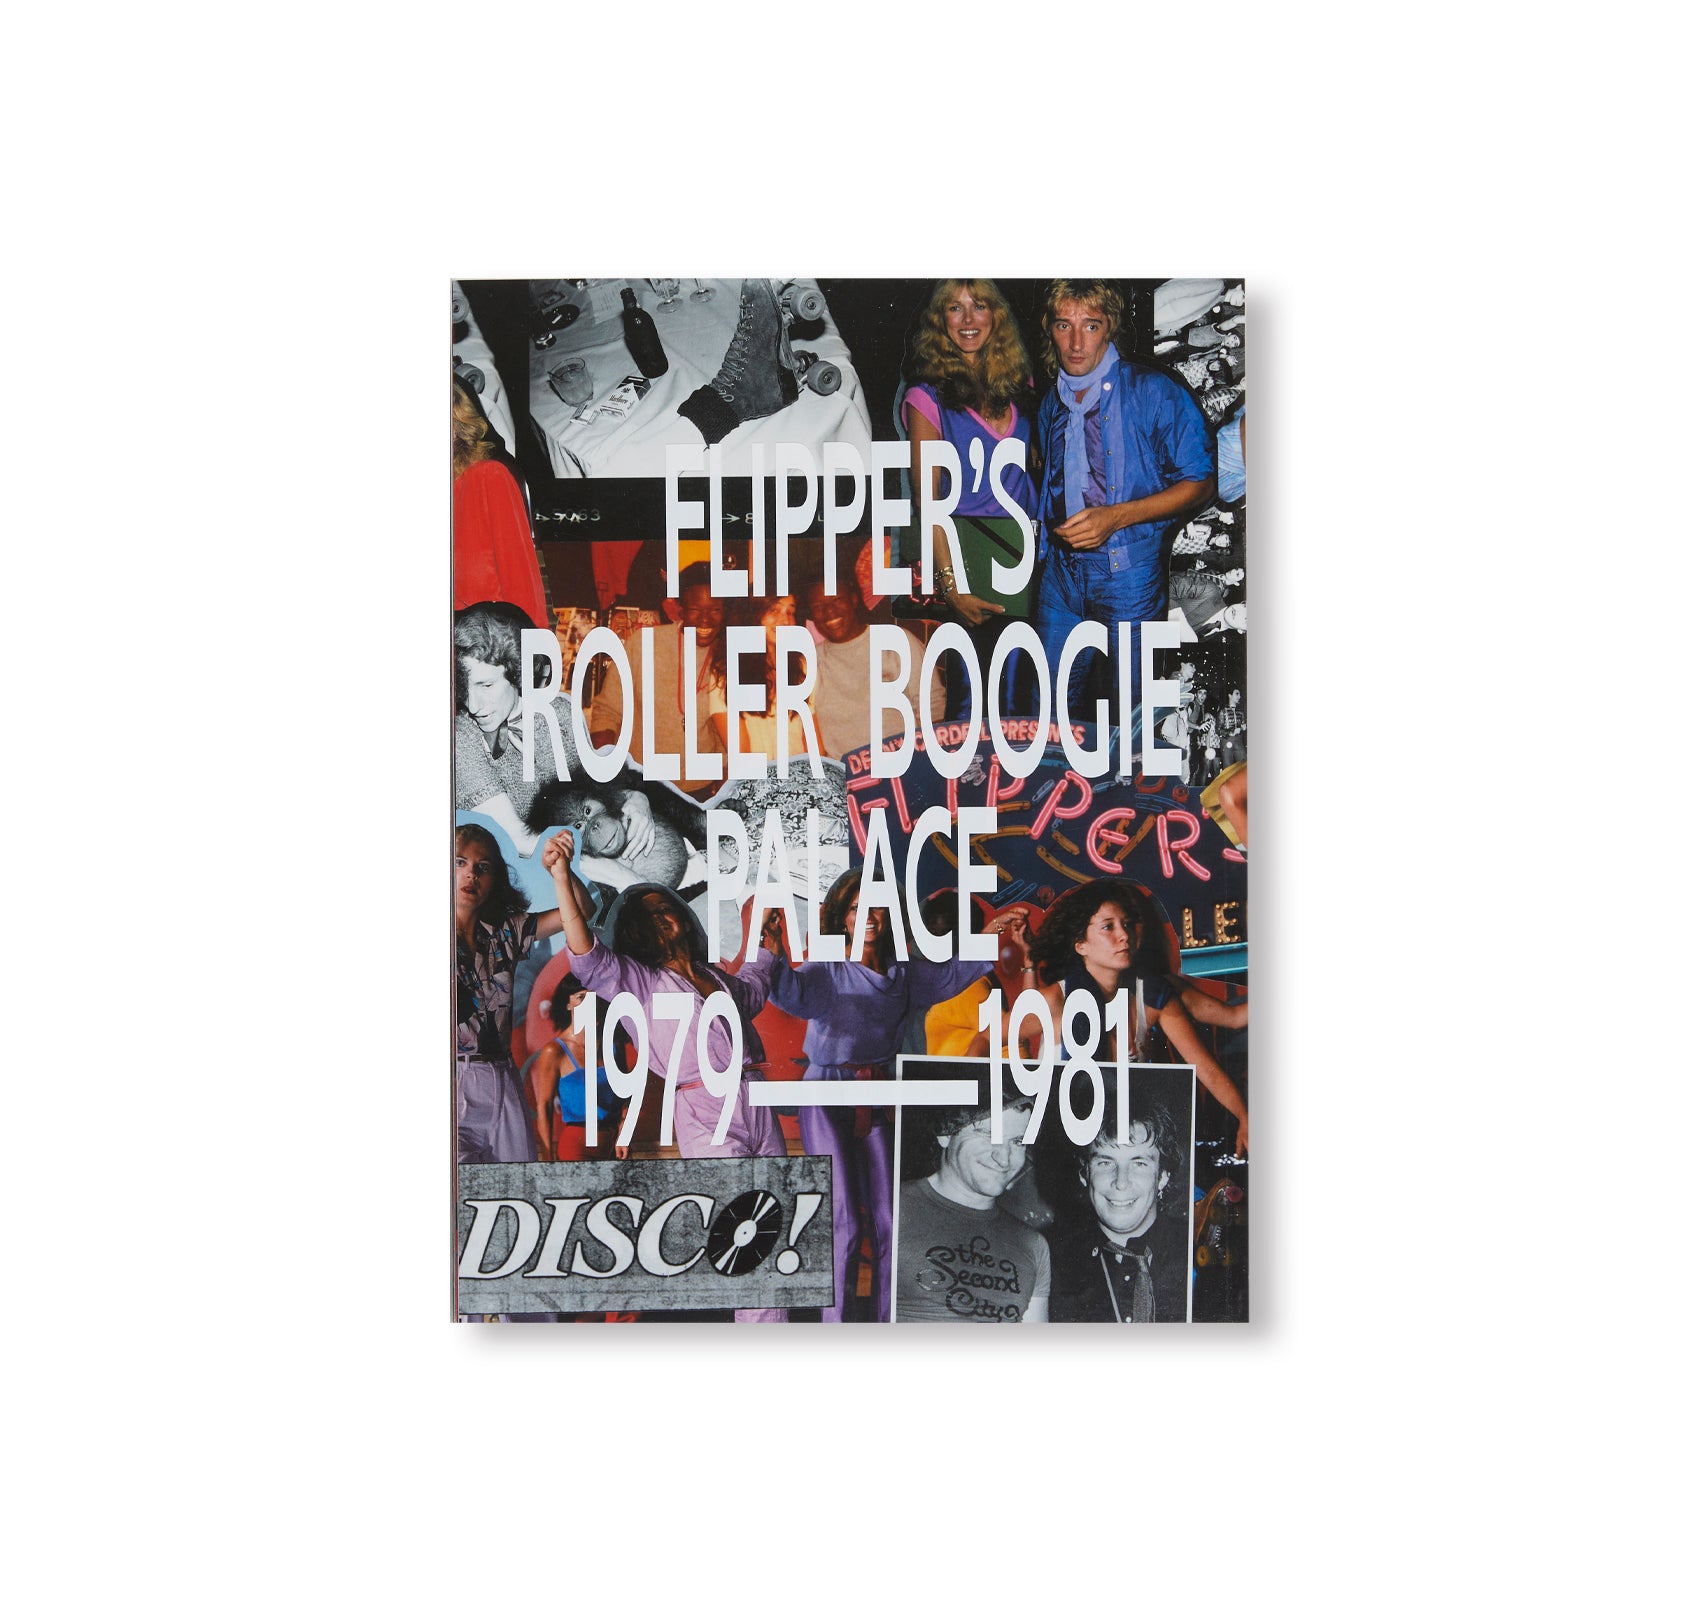 FLIPPER'S ROLLER BOOGIE PALACE 1979-1981